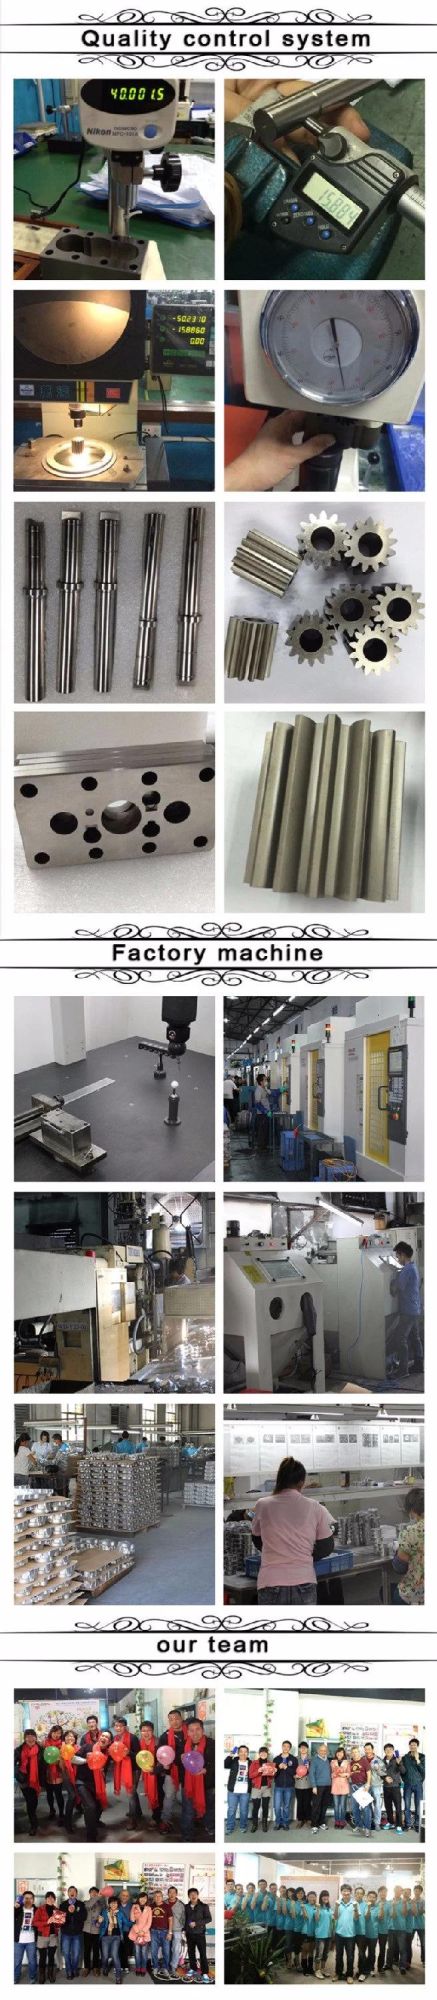 China Aluminum High Precision Injection Parts